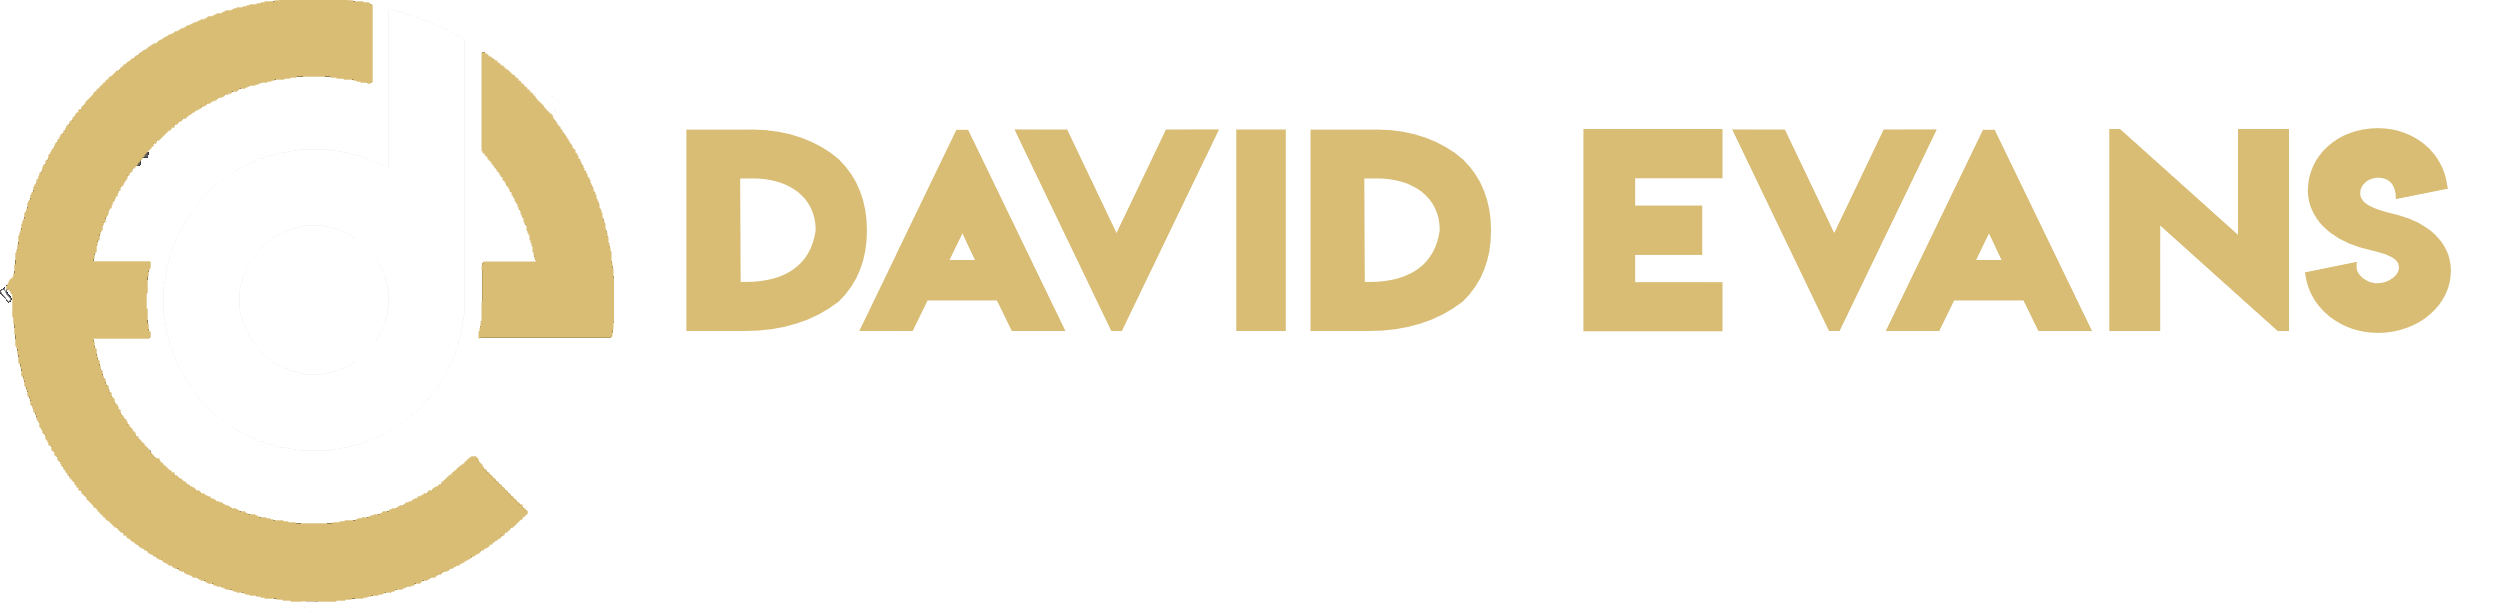 David Evans Racing